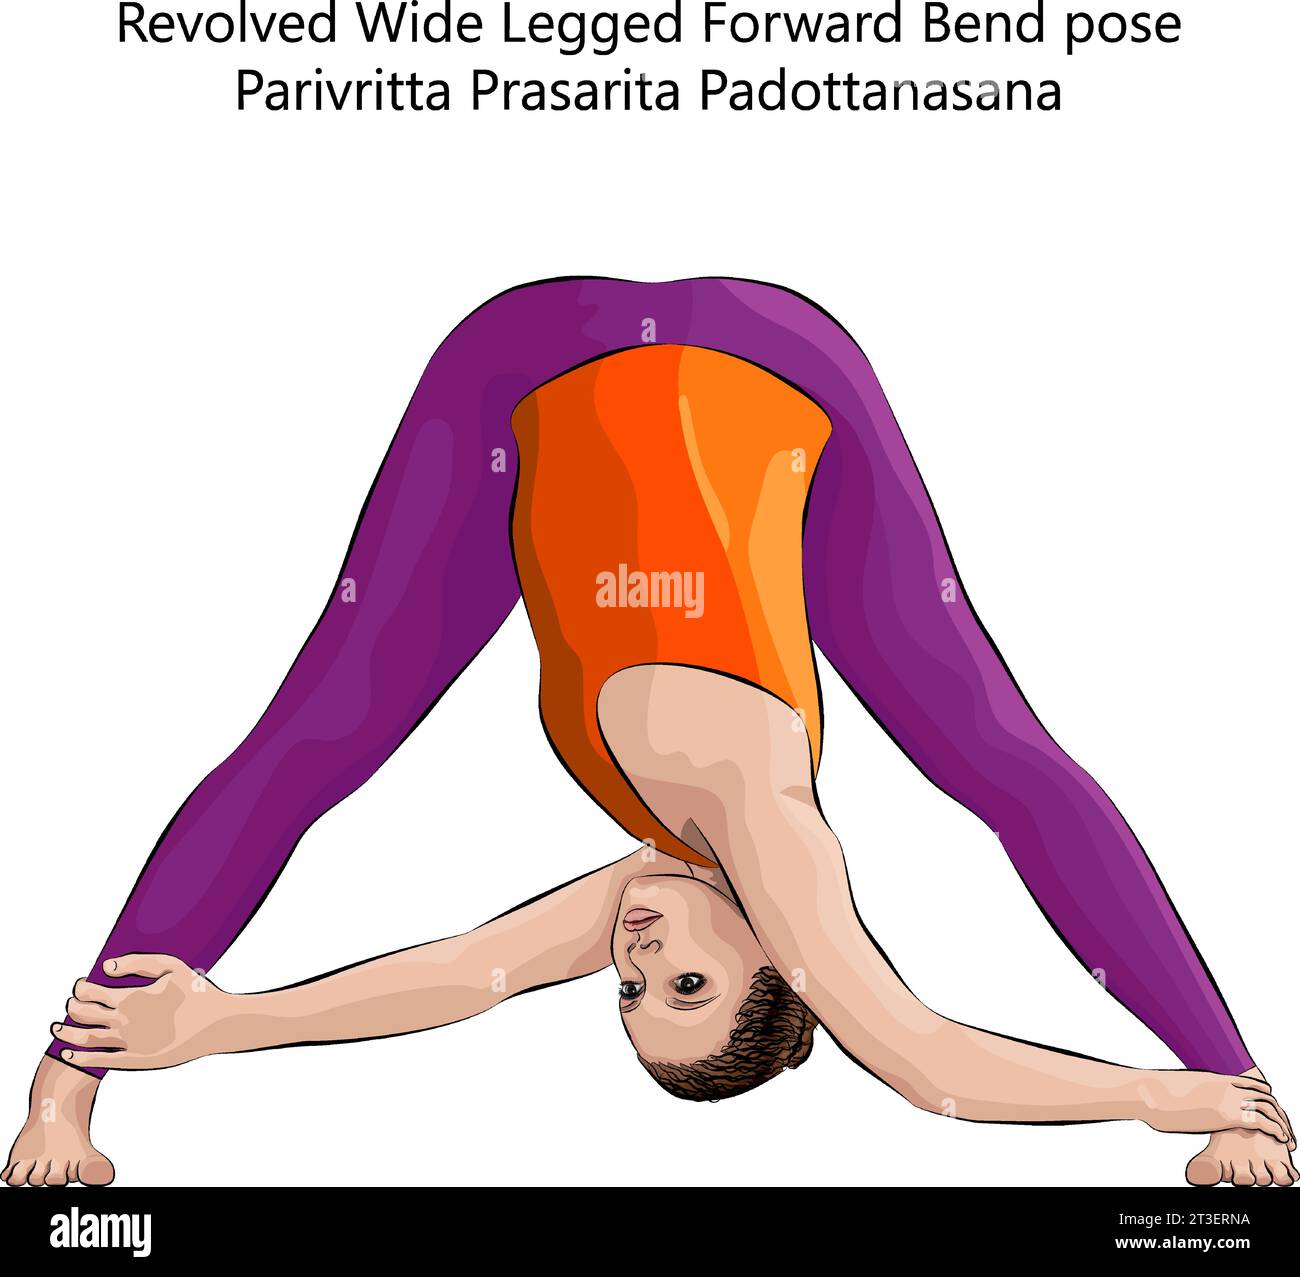 Yoga pose. Parivritta Prasarita Padottanasana. Revolved Wide Legged Forward Bend pose. Intermediate Difficulty. Isolated vector illustration. Stock Vector